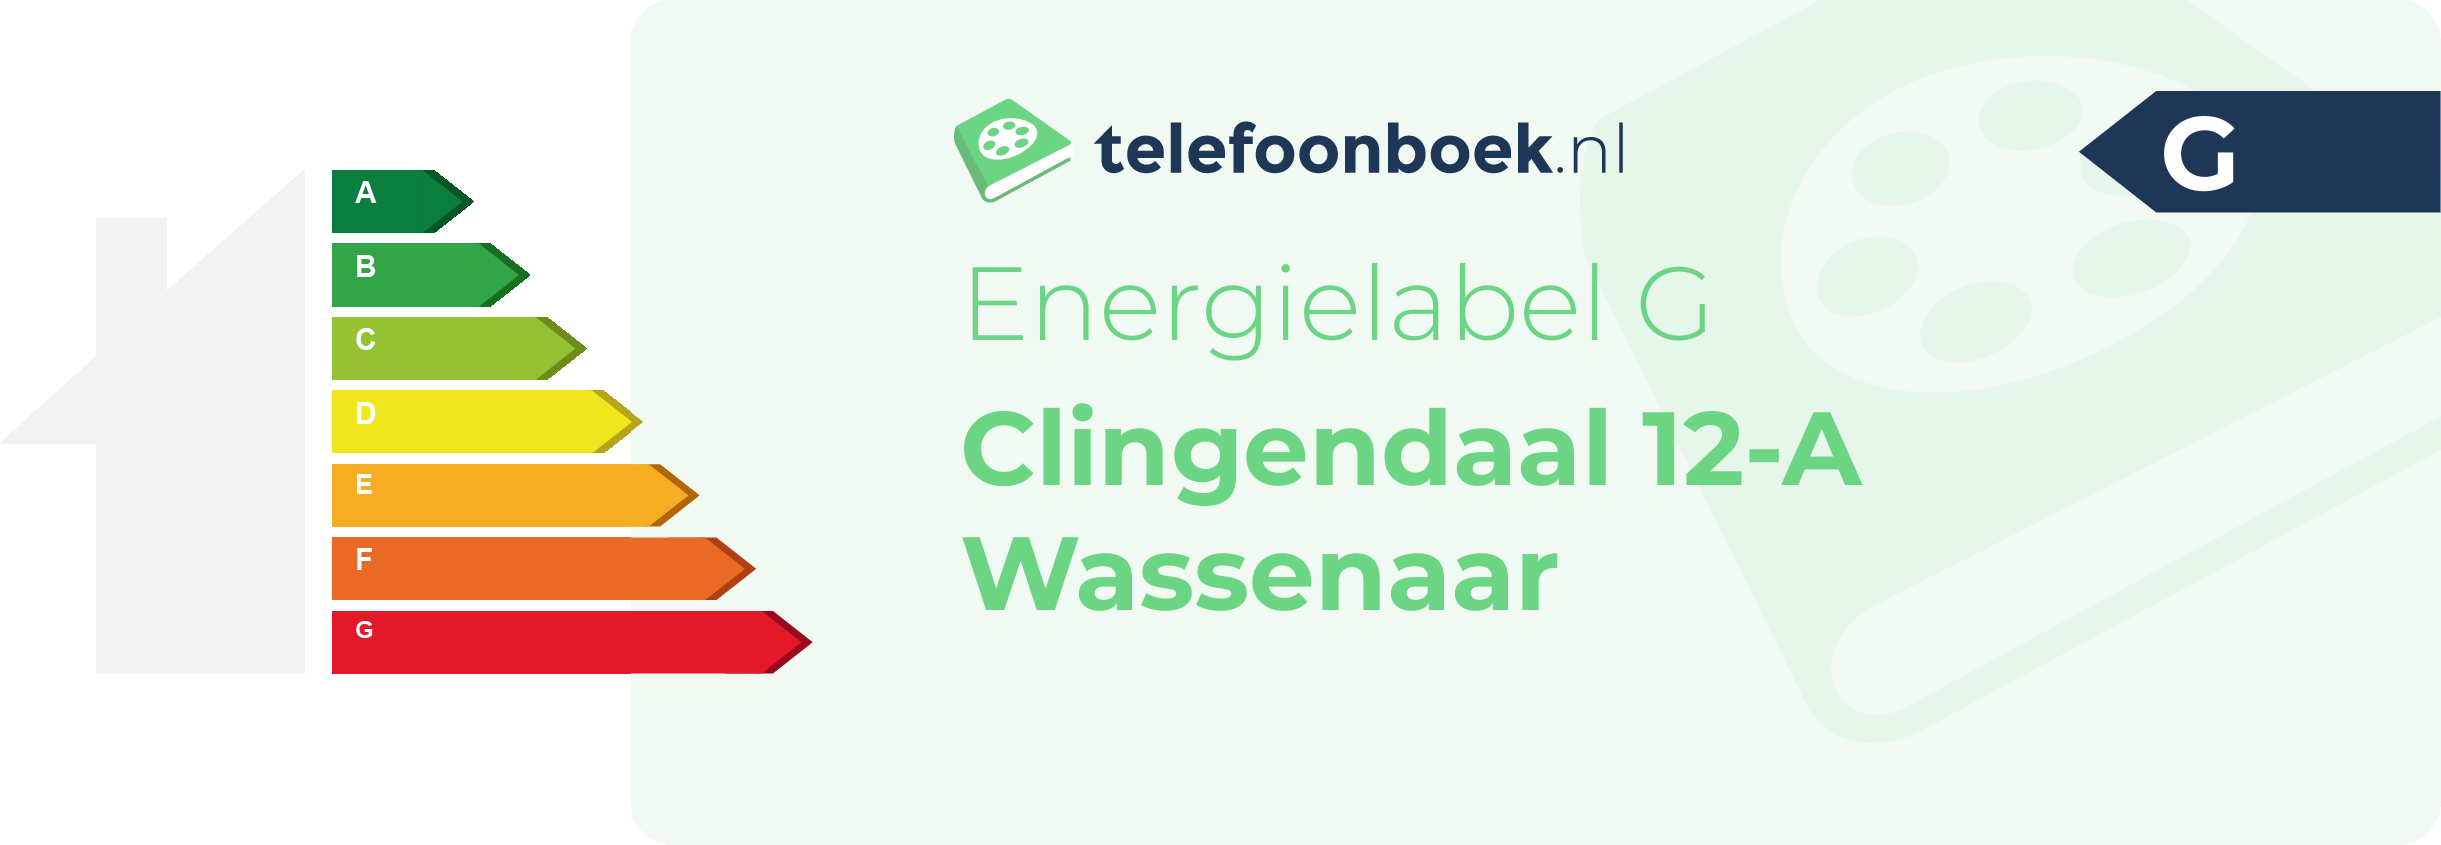 Energielabel Clingendaal 12-A Wassenaar